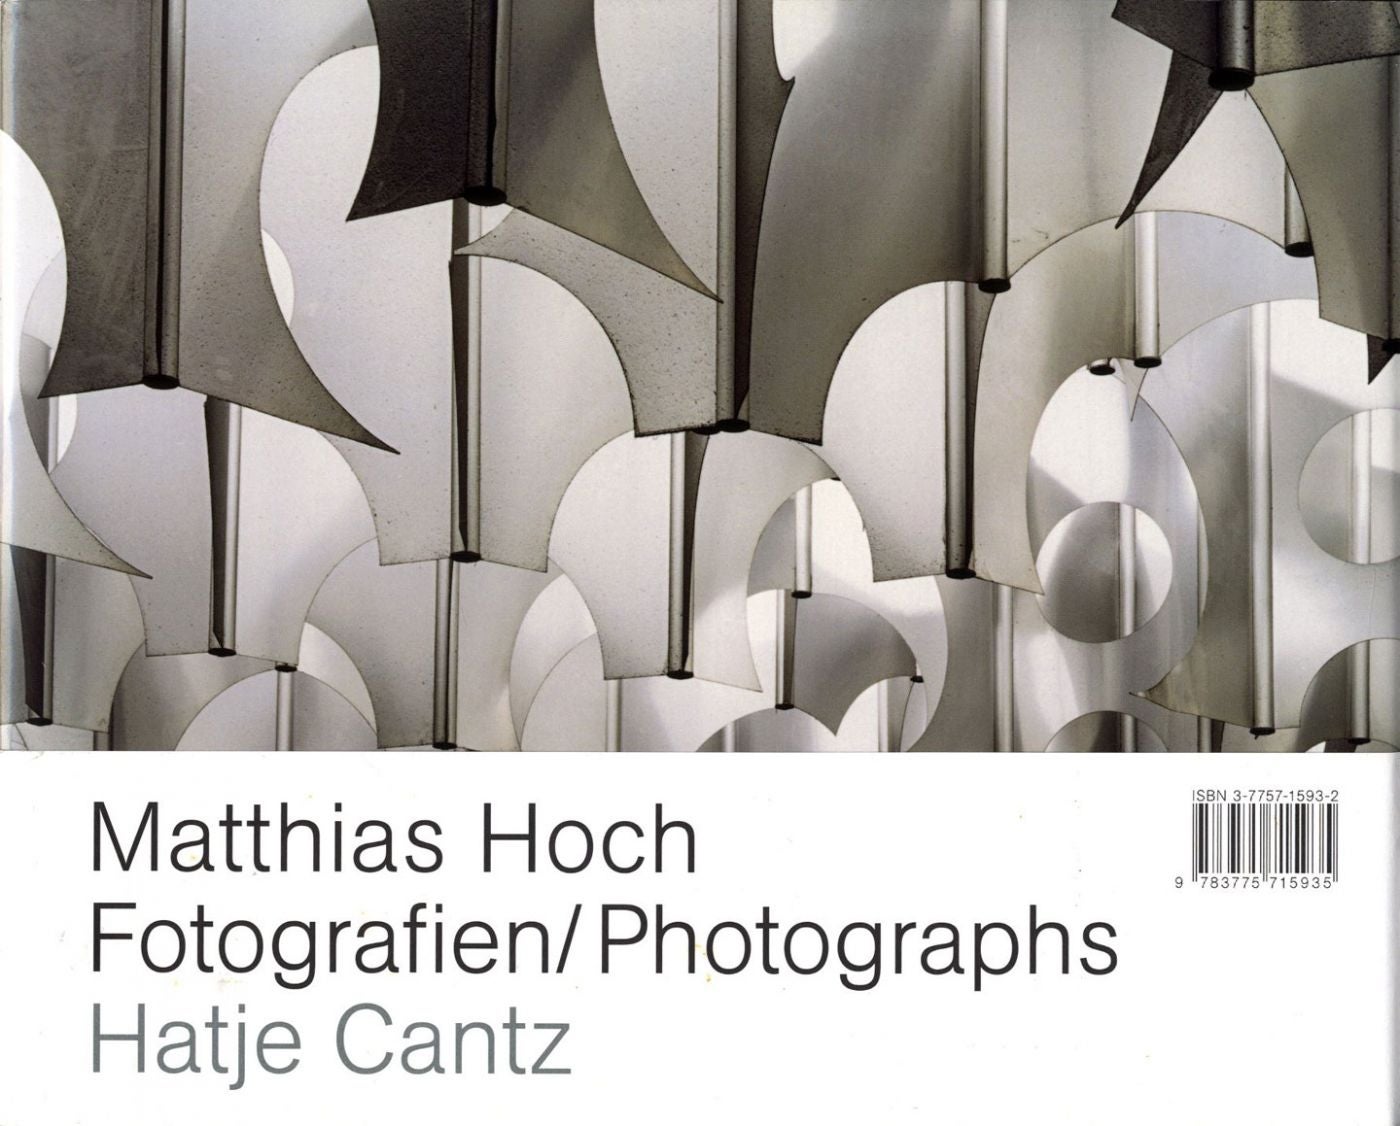 Matthias Hoch: Fotografien / Photographs (Hatje Cantz)